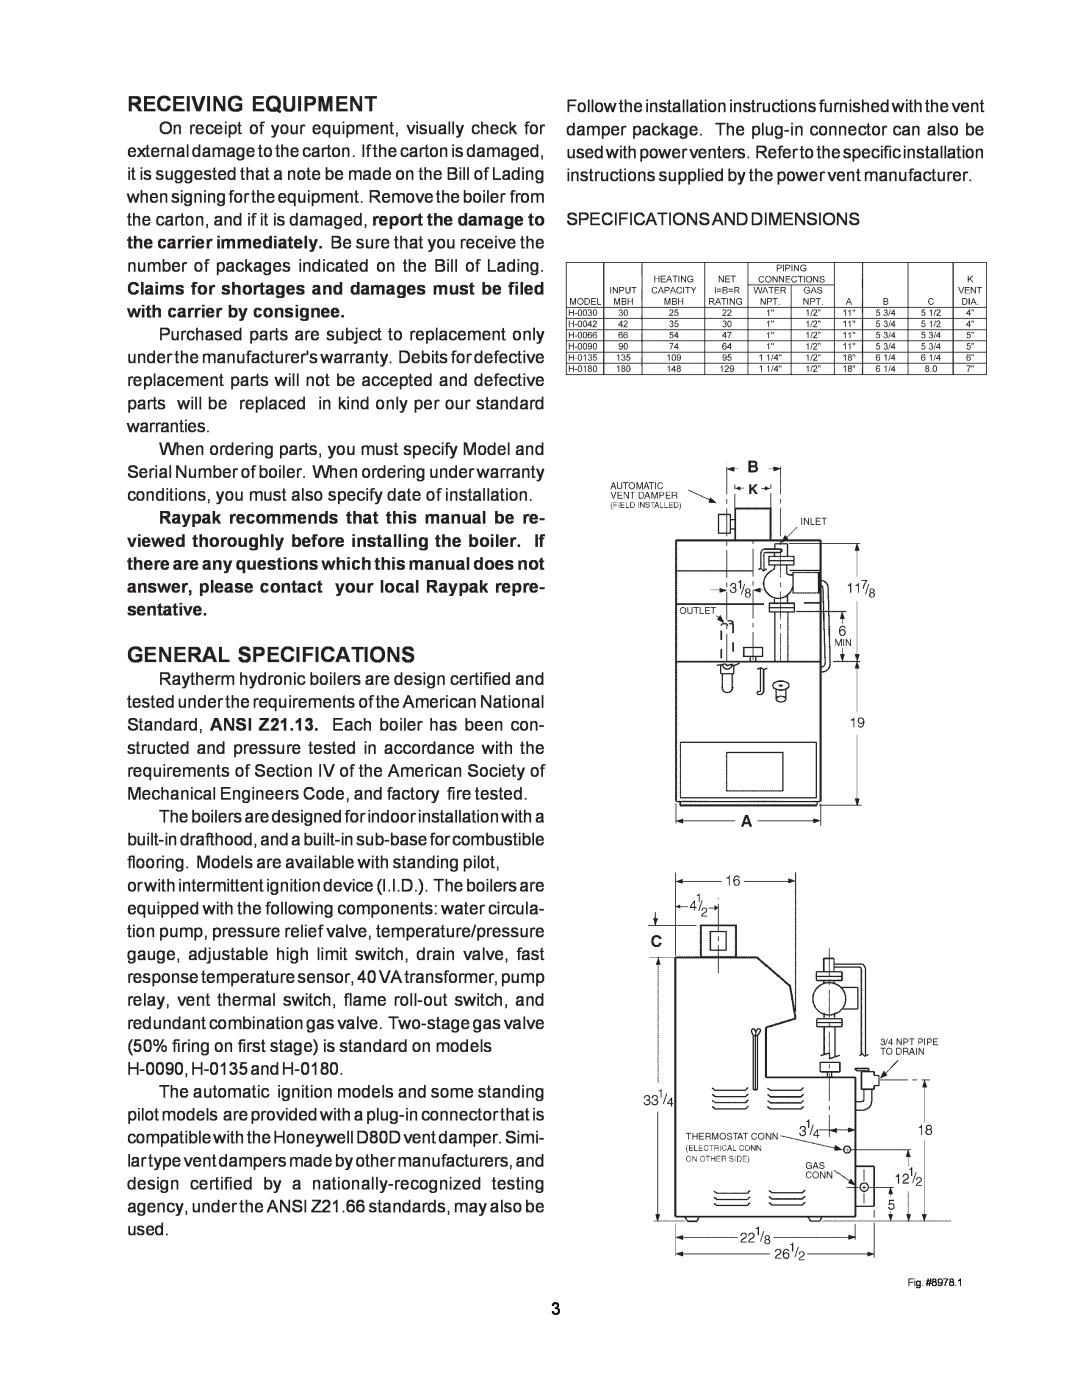 Raypak 0030B, 0090B, 0135B manual Receiving Equipment, General Specifications 